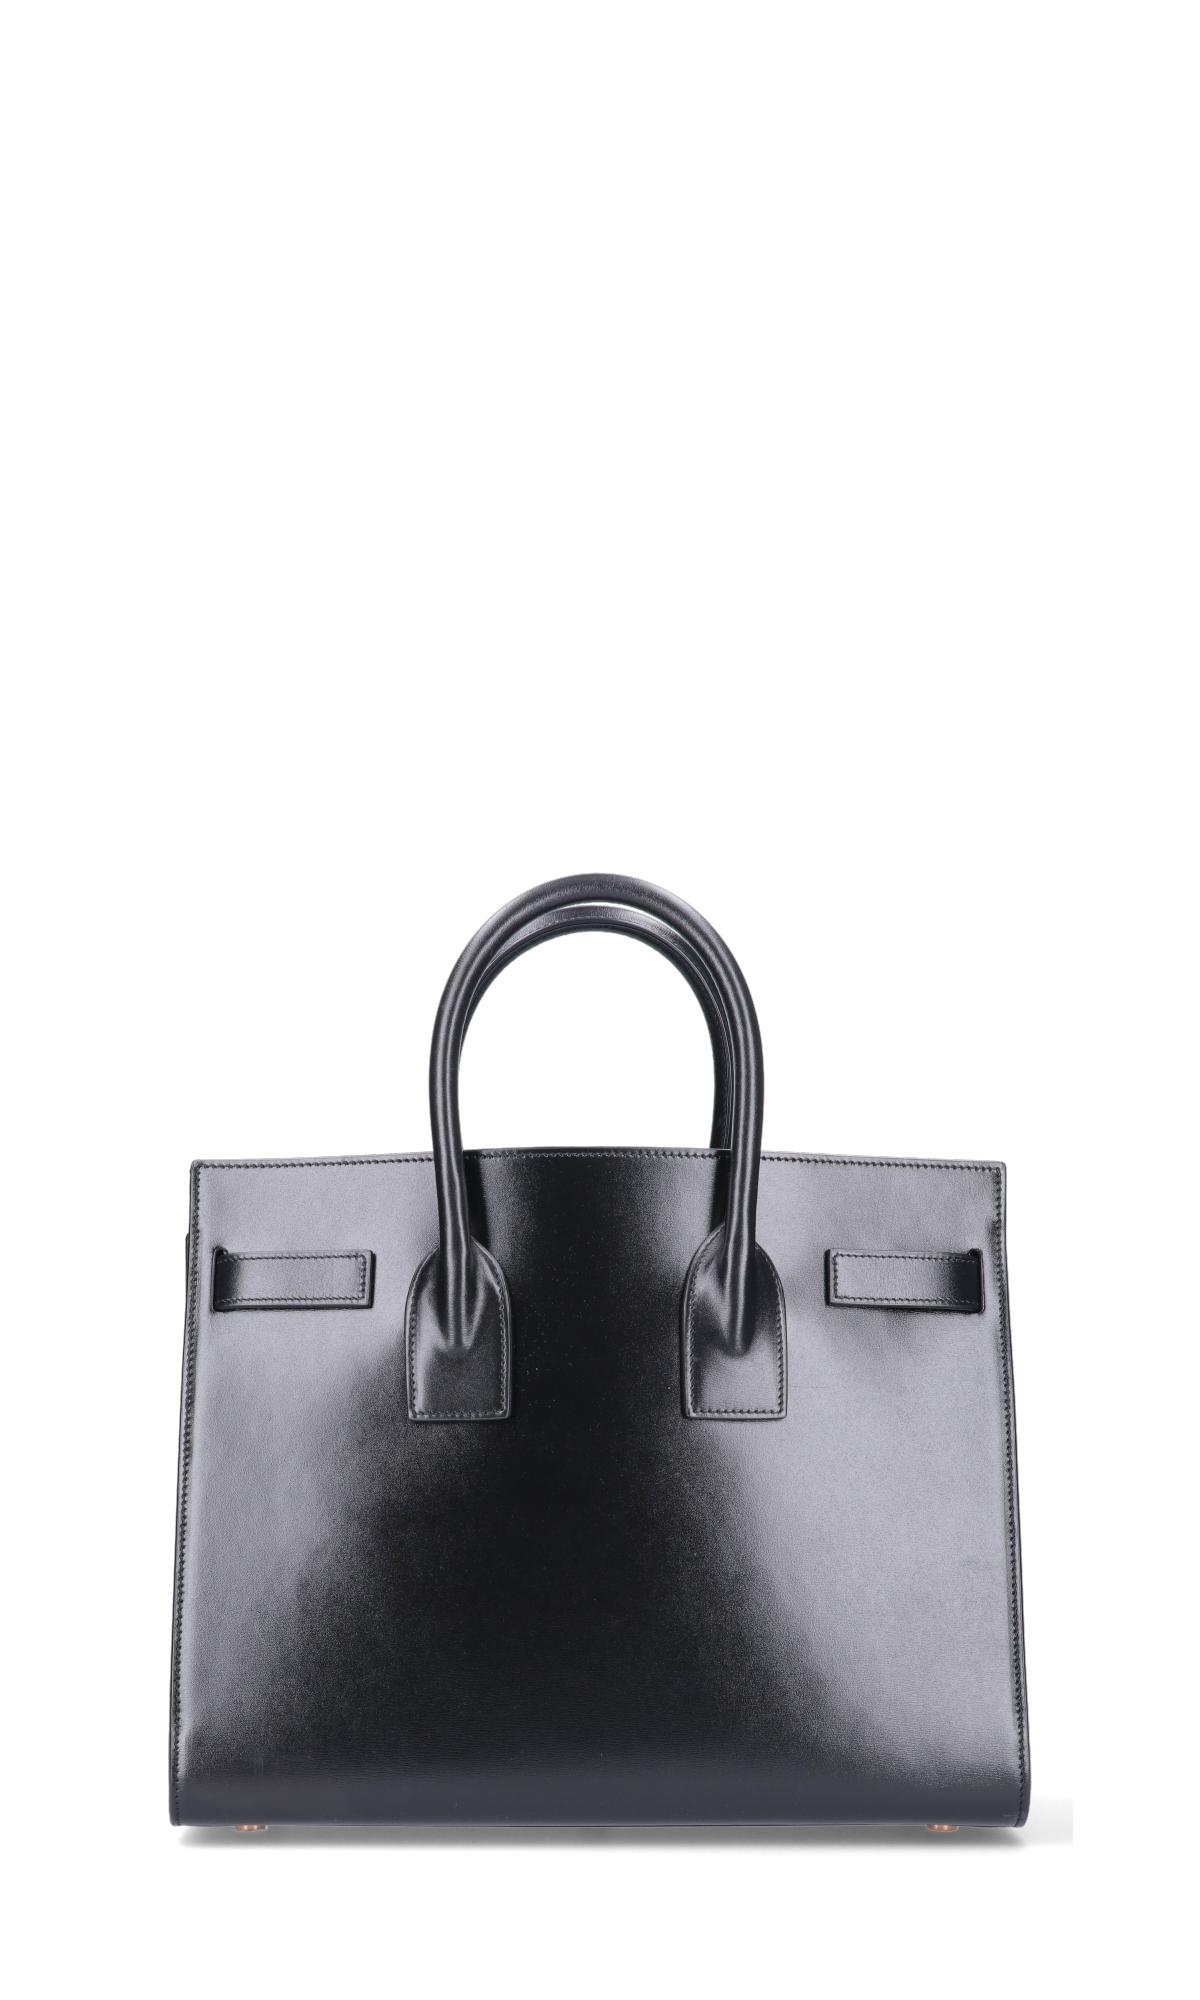 Saint Laurent Leather Small 'sac De Jour' Bag in Nero (Black) | Lyst